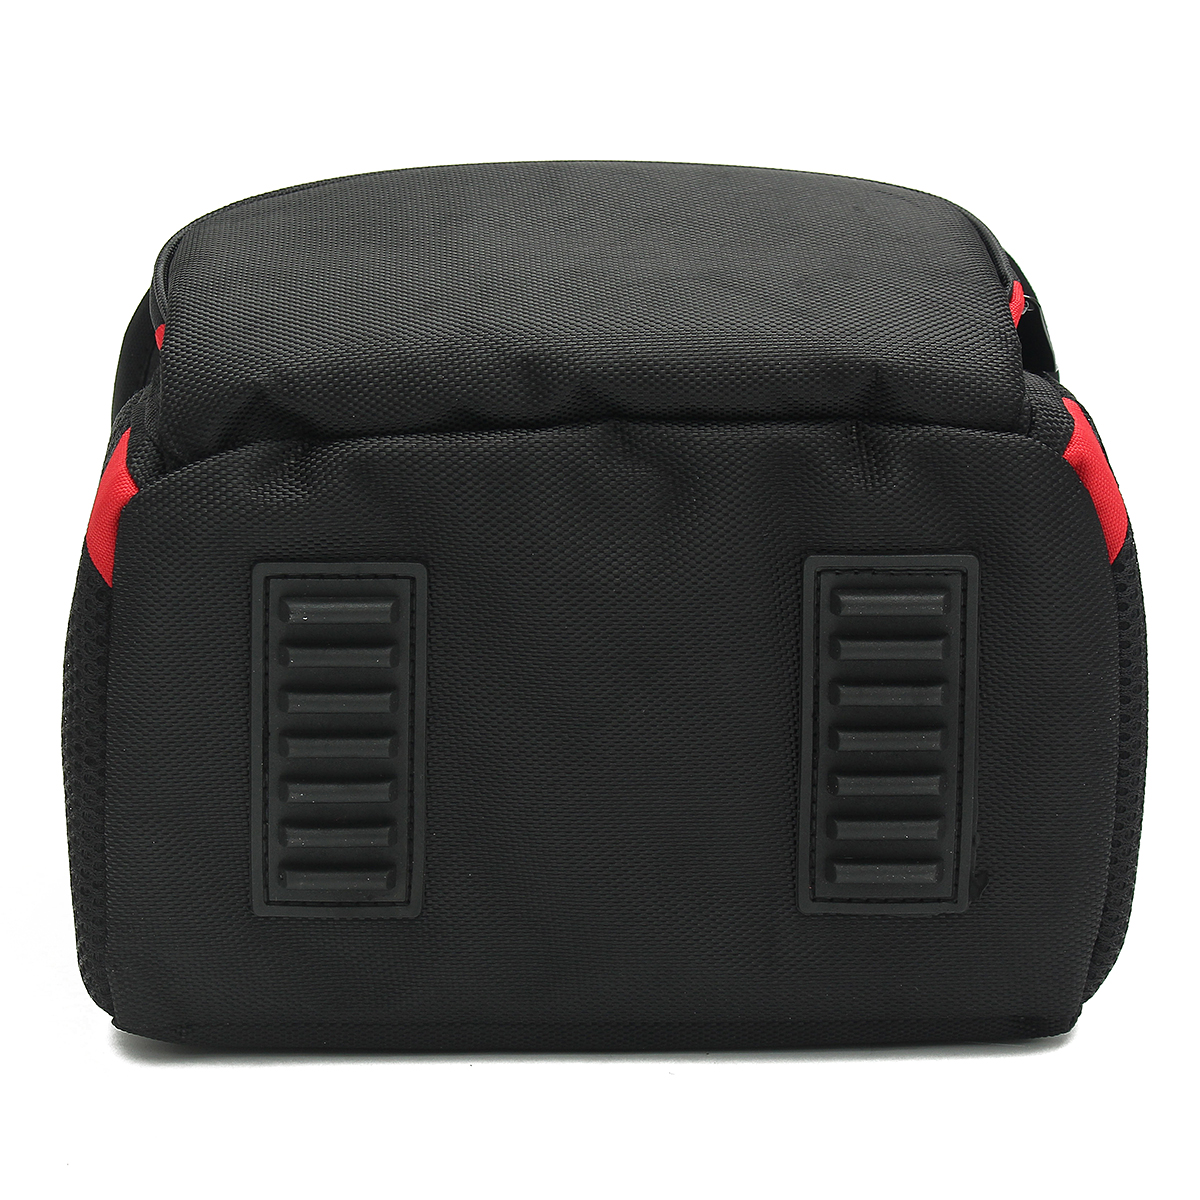 Waterproof-Camera-Shoulder-Bag-Travel-Carrying-Case-with-Rain-Cover-For-DSLR-SLR-Camera-Flash-Lens-1633799-6